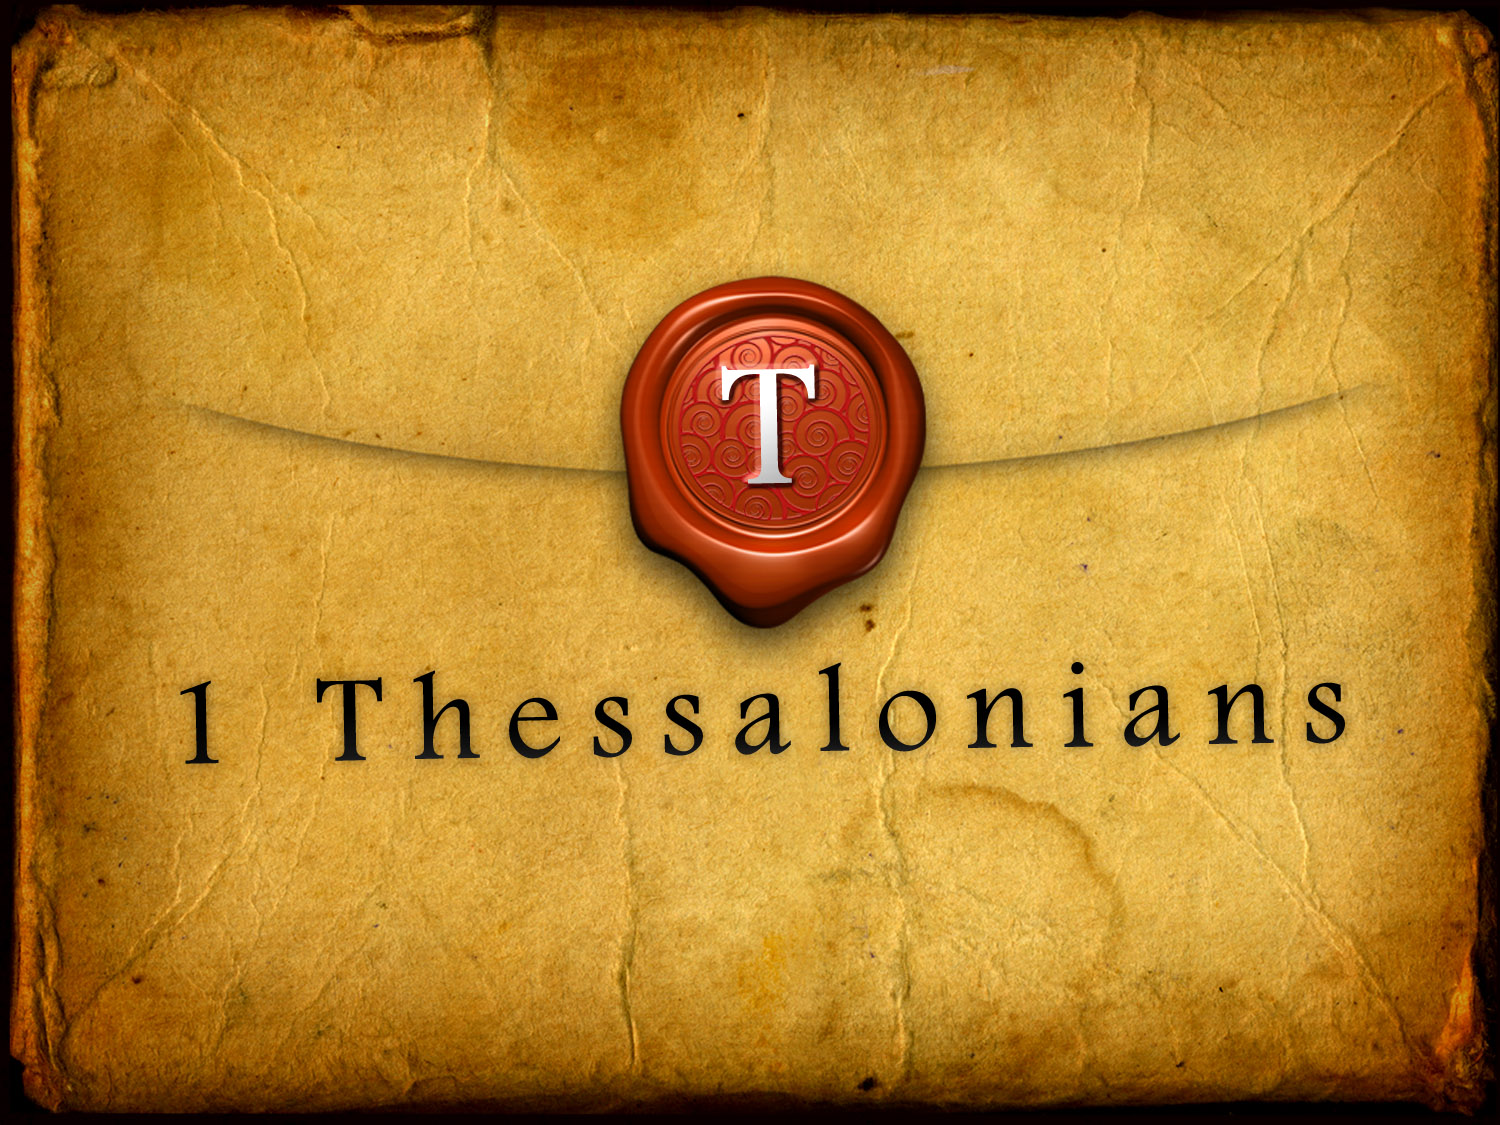 1 Thessalonians 5:19-22